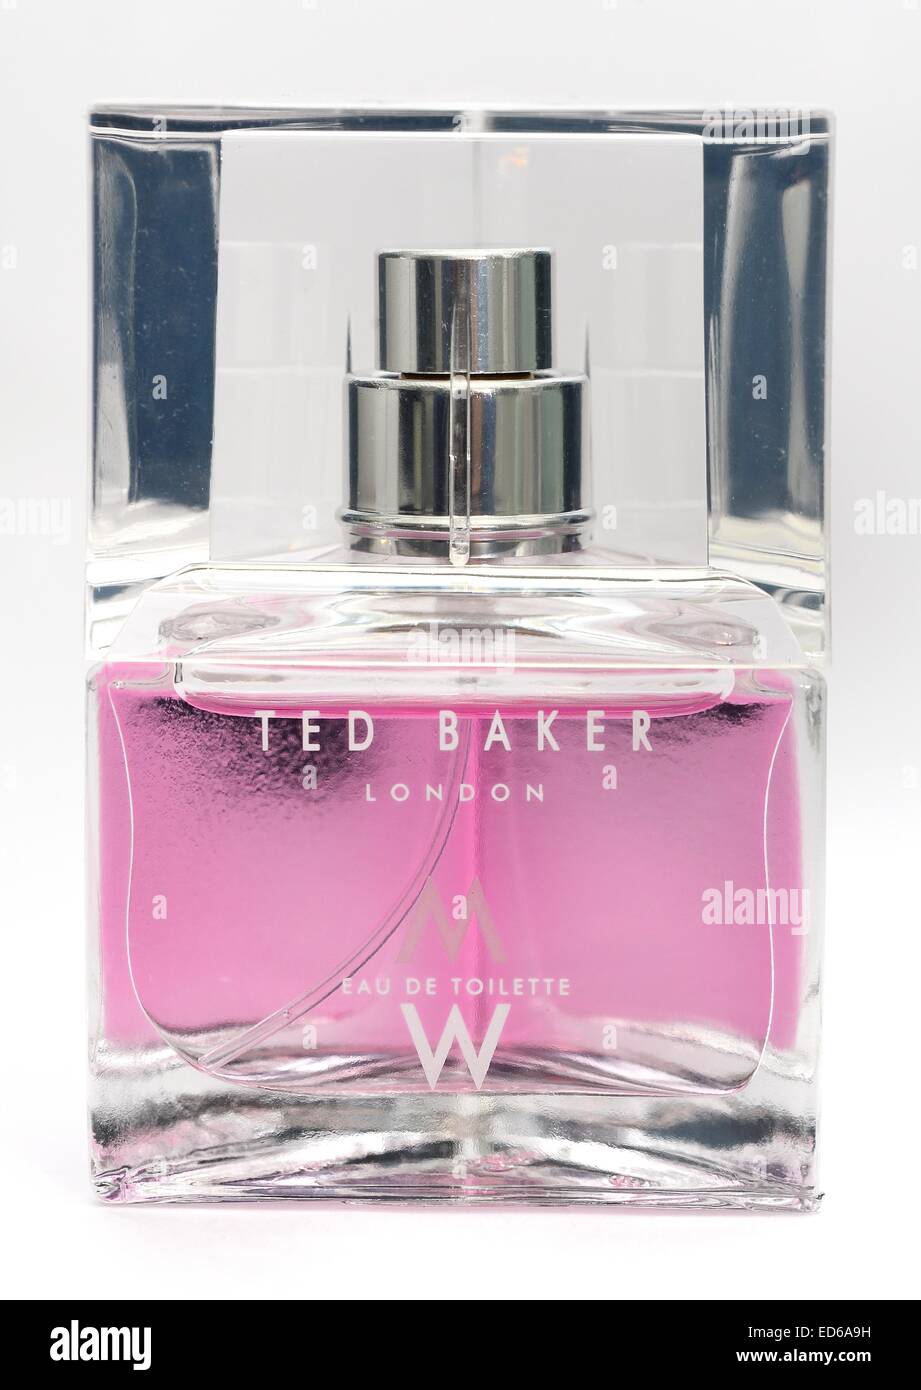 Ted Baker W per donna eau de toilette fragranza Foto Stock